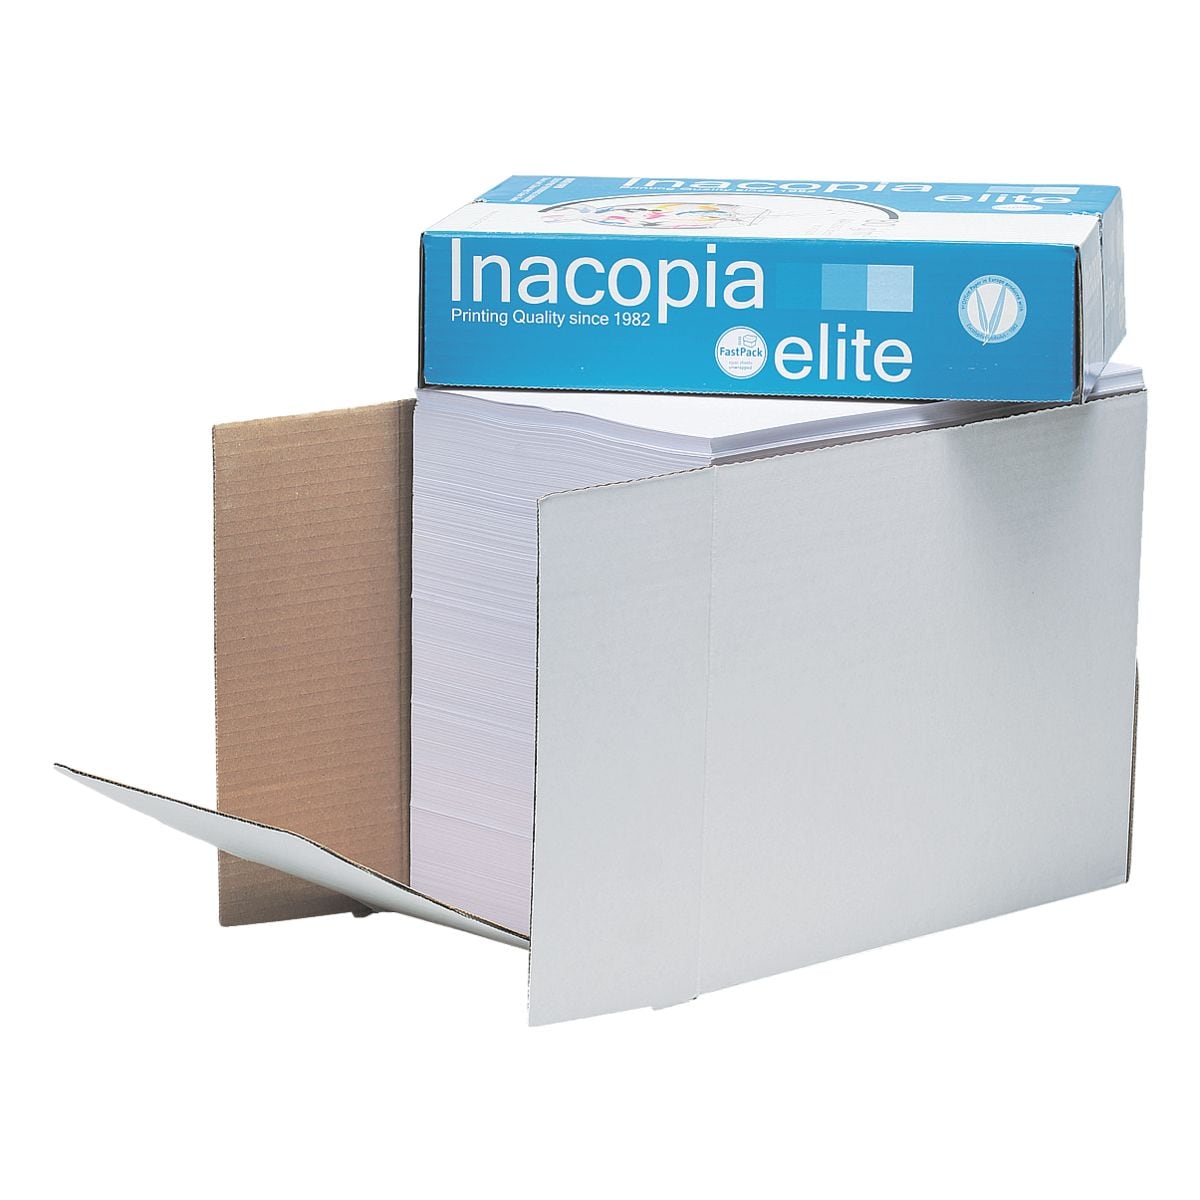 Maxi-Box Multifunktionales Druckerpapier A4 Inacopia Elite Maxi-Box - 2500 Blatt gesamt, 80g/qm